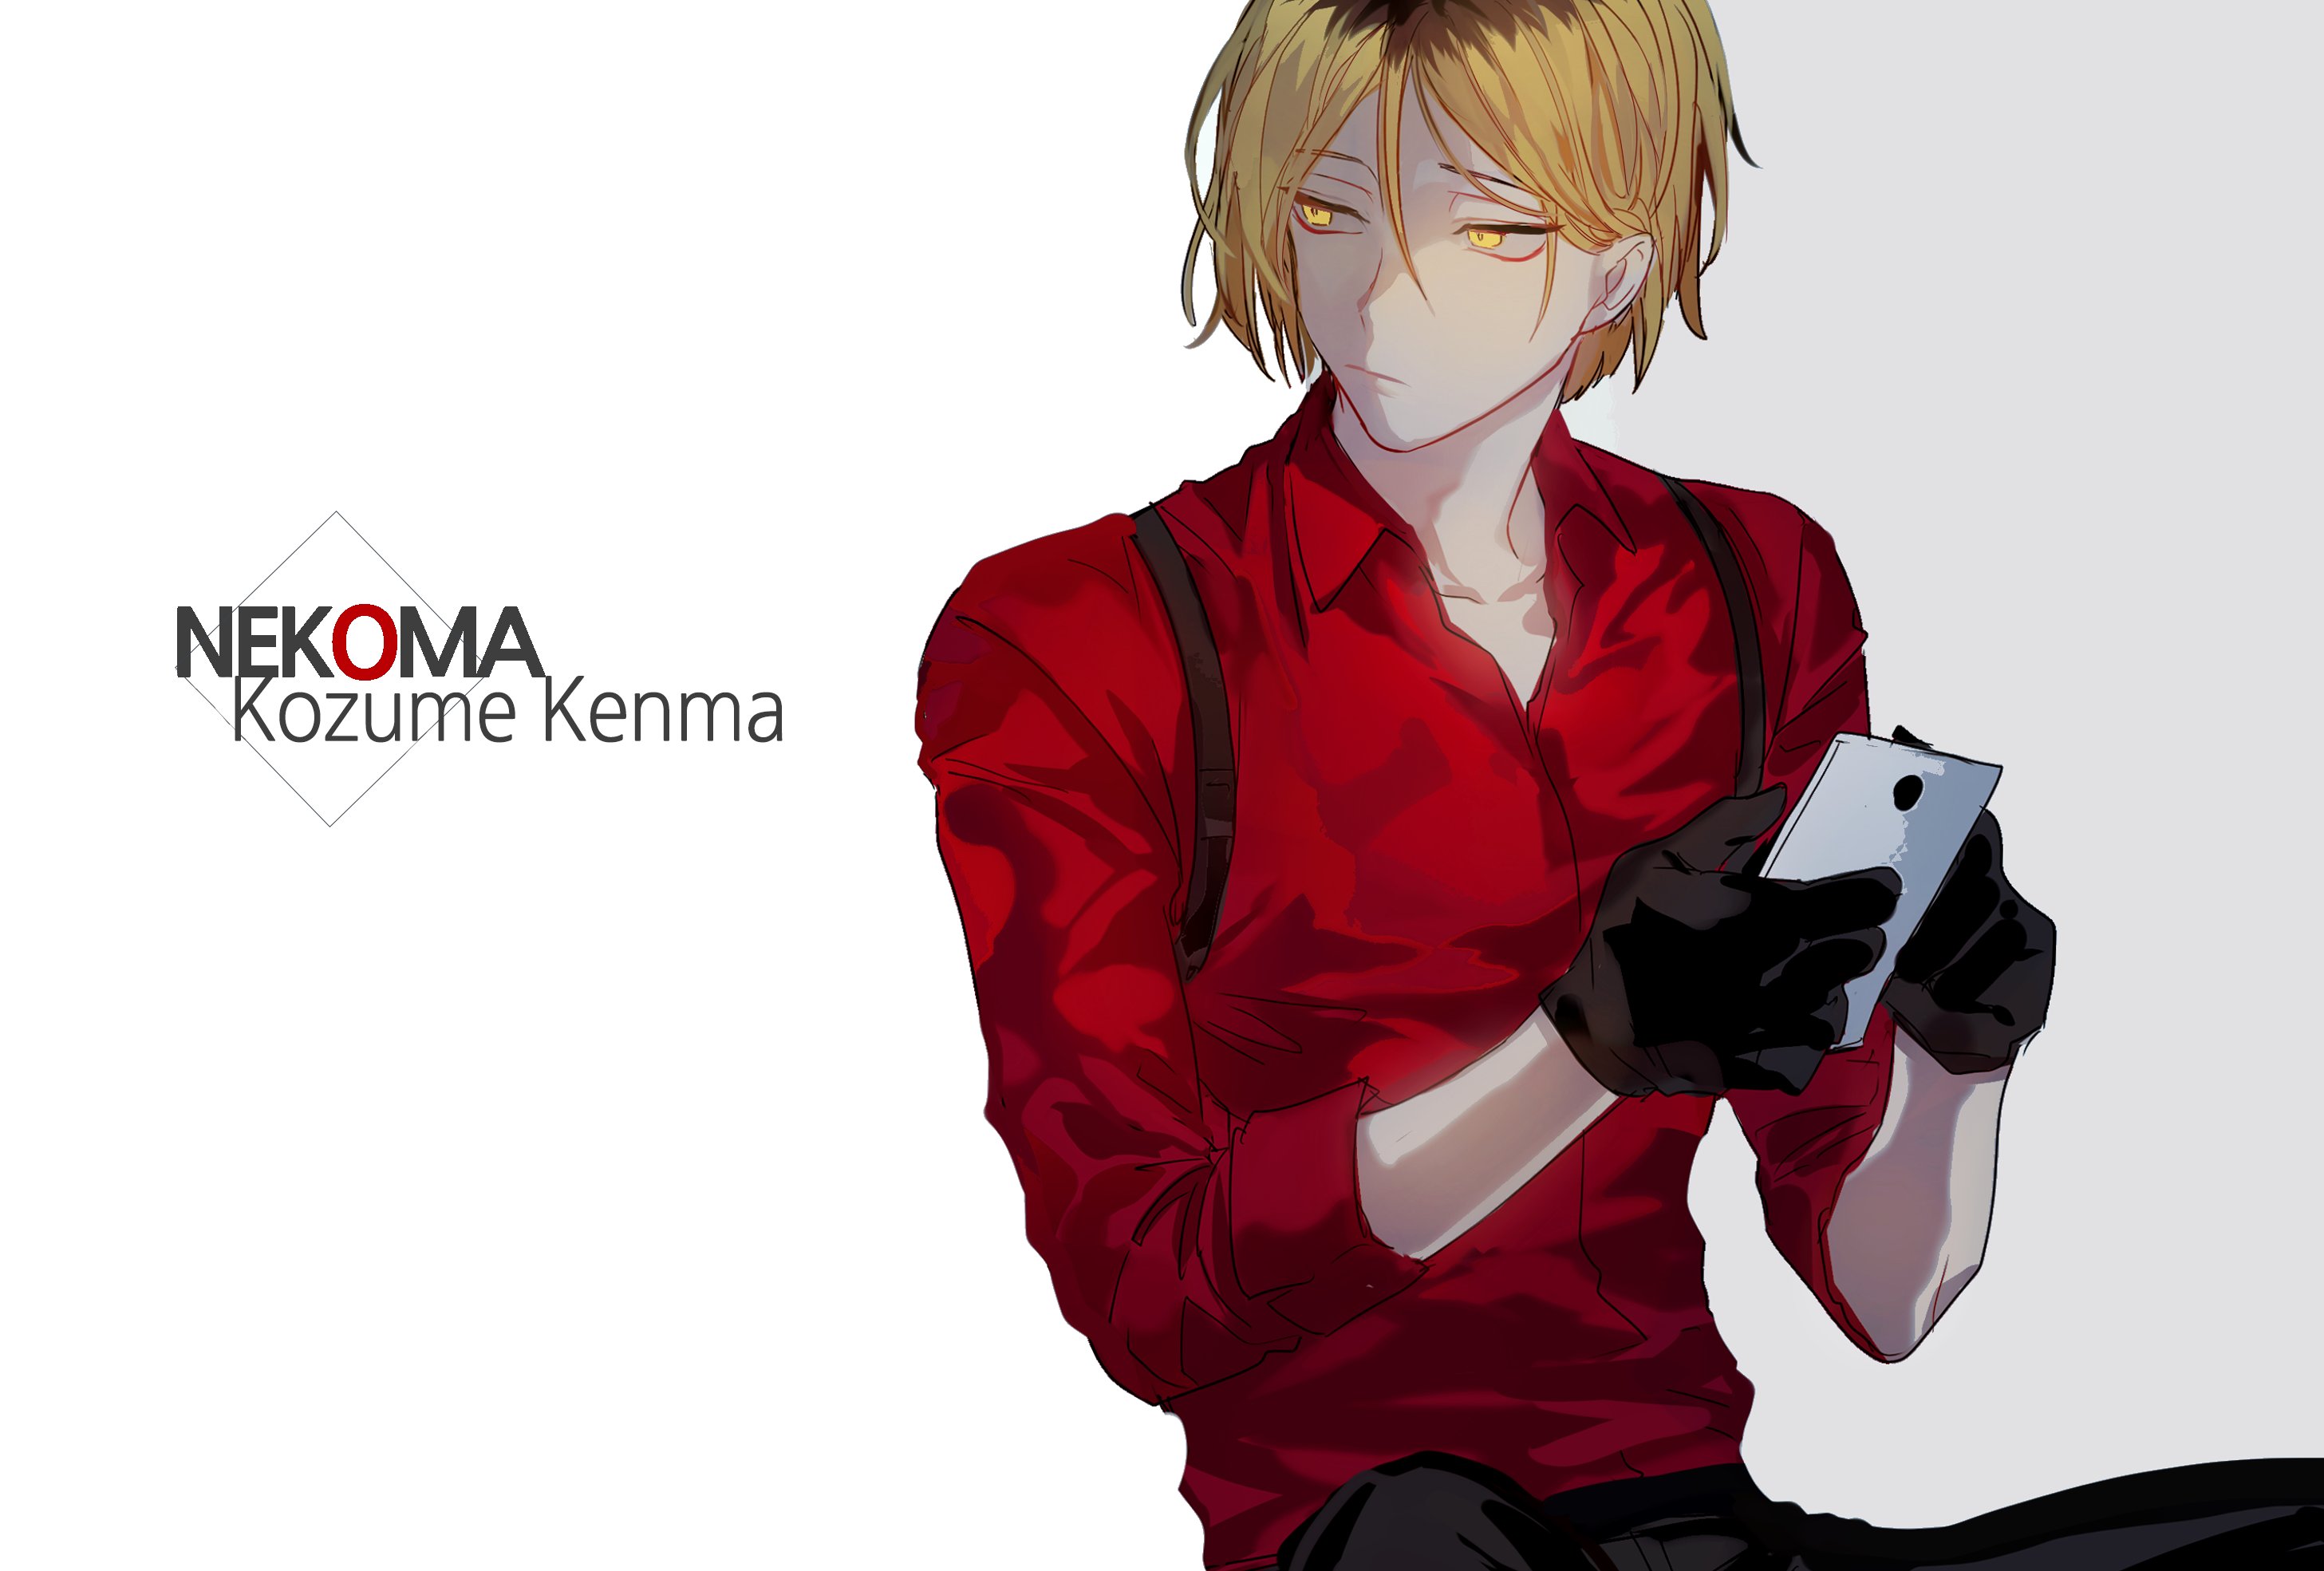 1042523 descargar imagen animado, haikyu!!, kenma kozume: fondos de pantalla y protectores de pantalla gratis